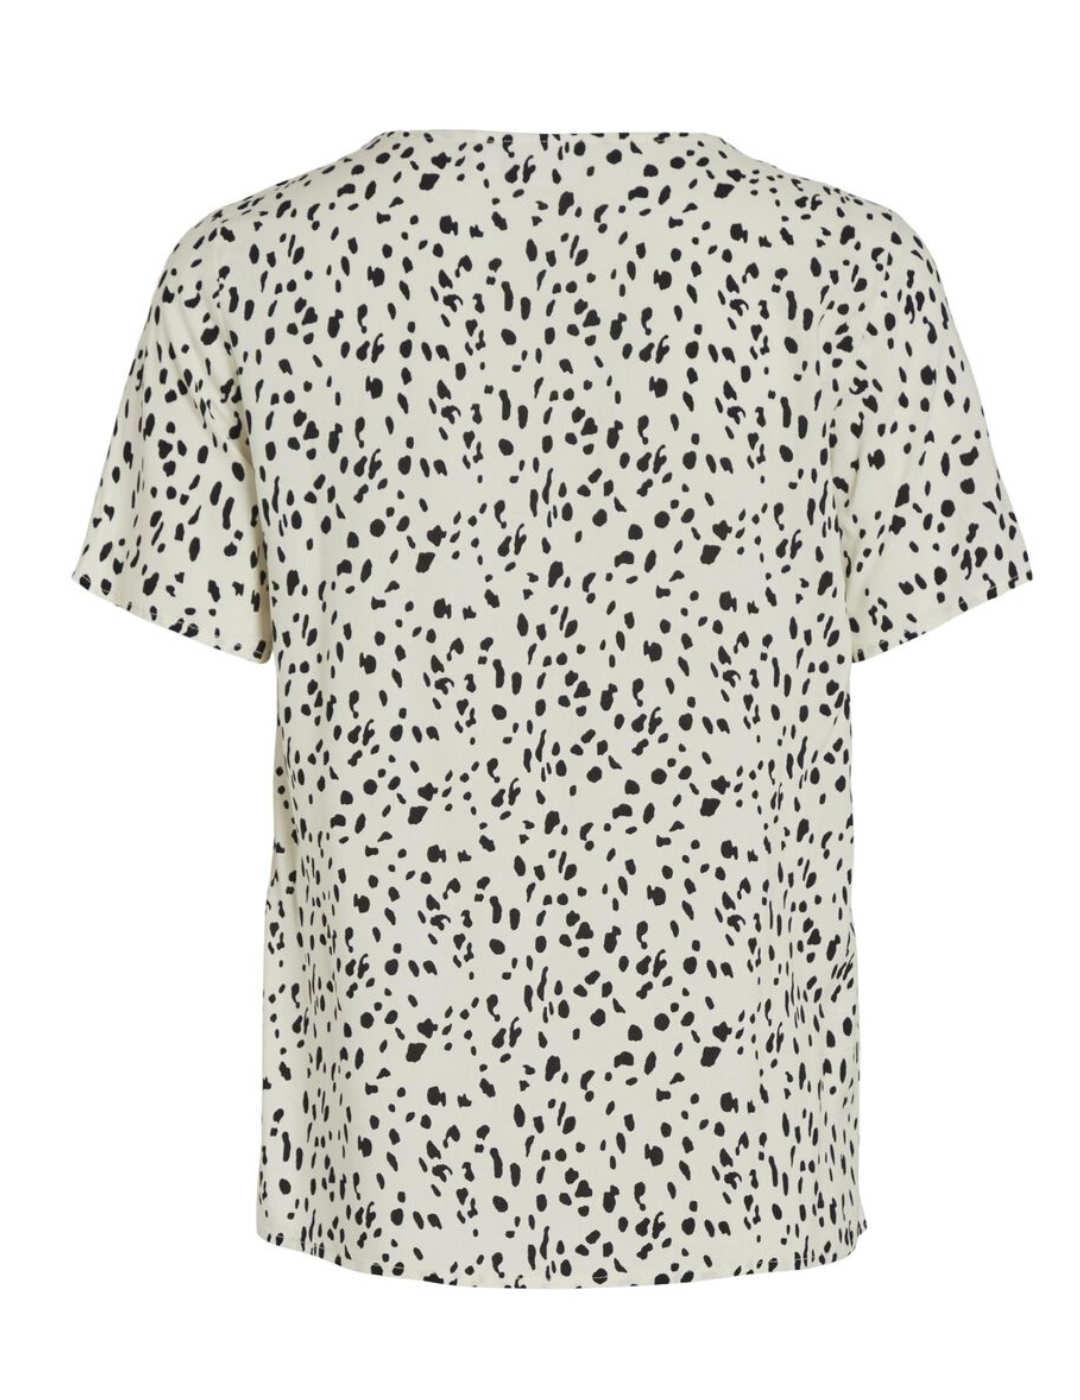 Camiseta Vila Paya animal print blanca cuello pico de mujer